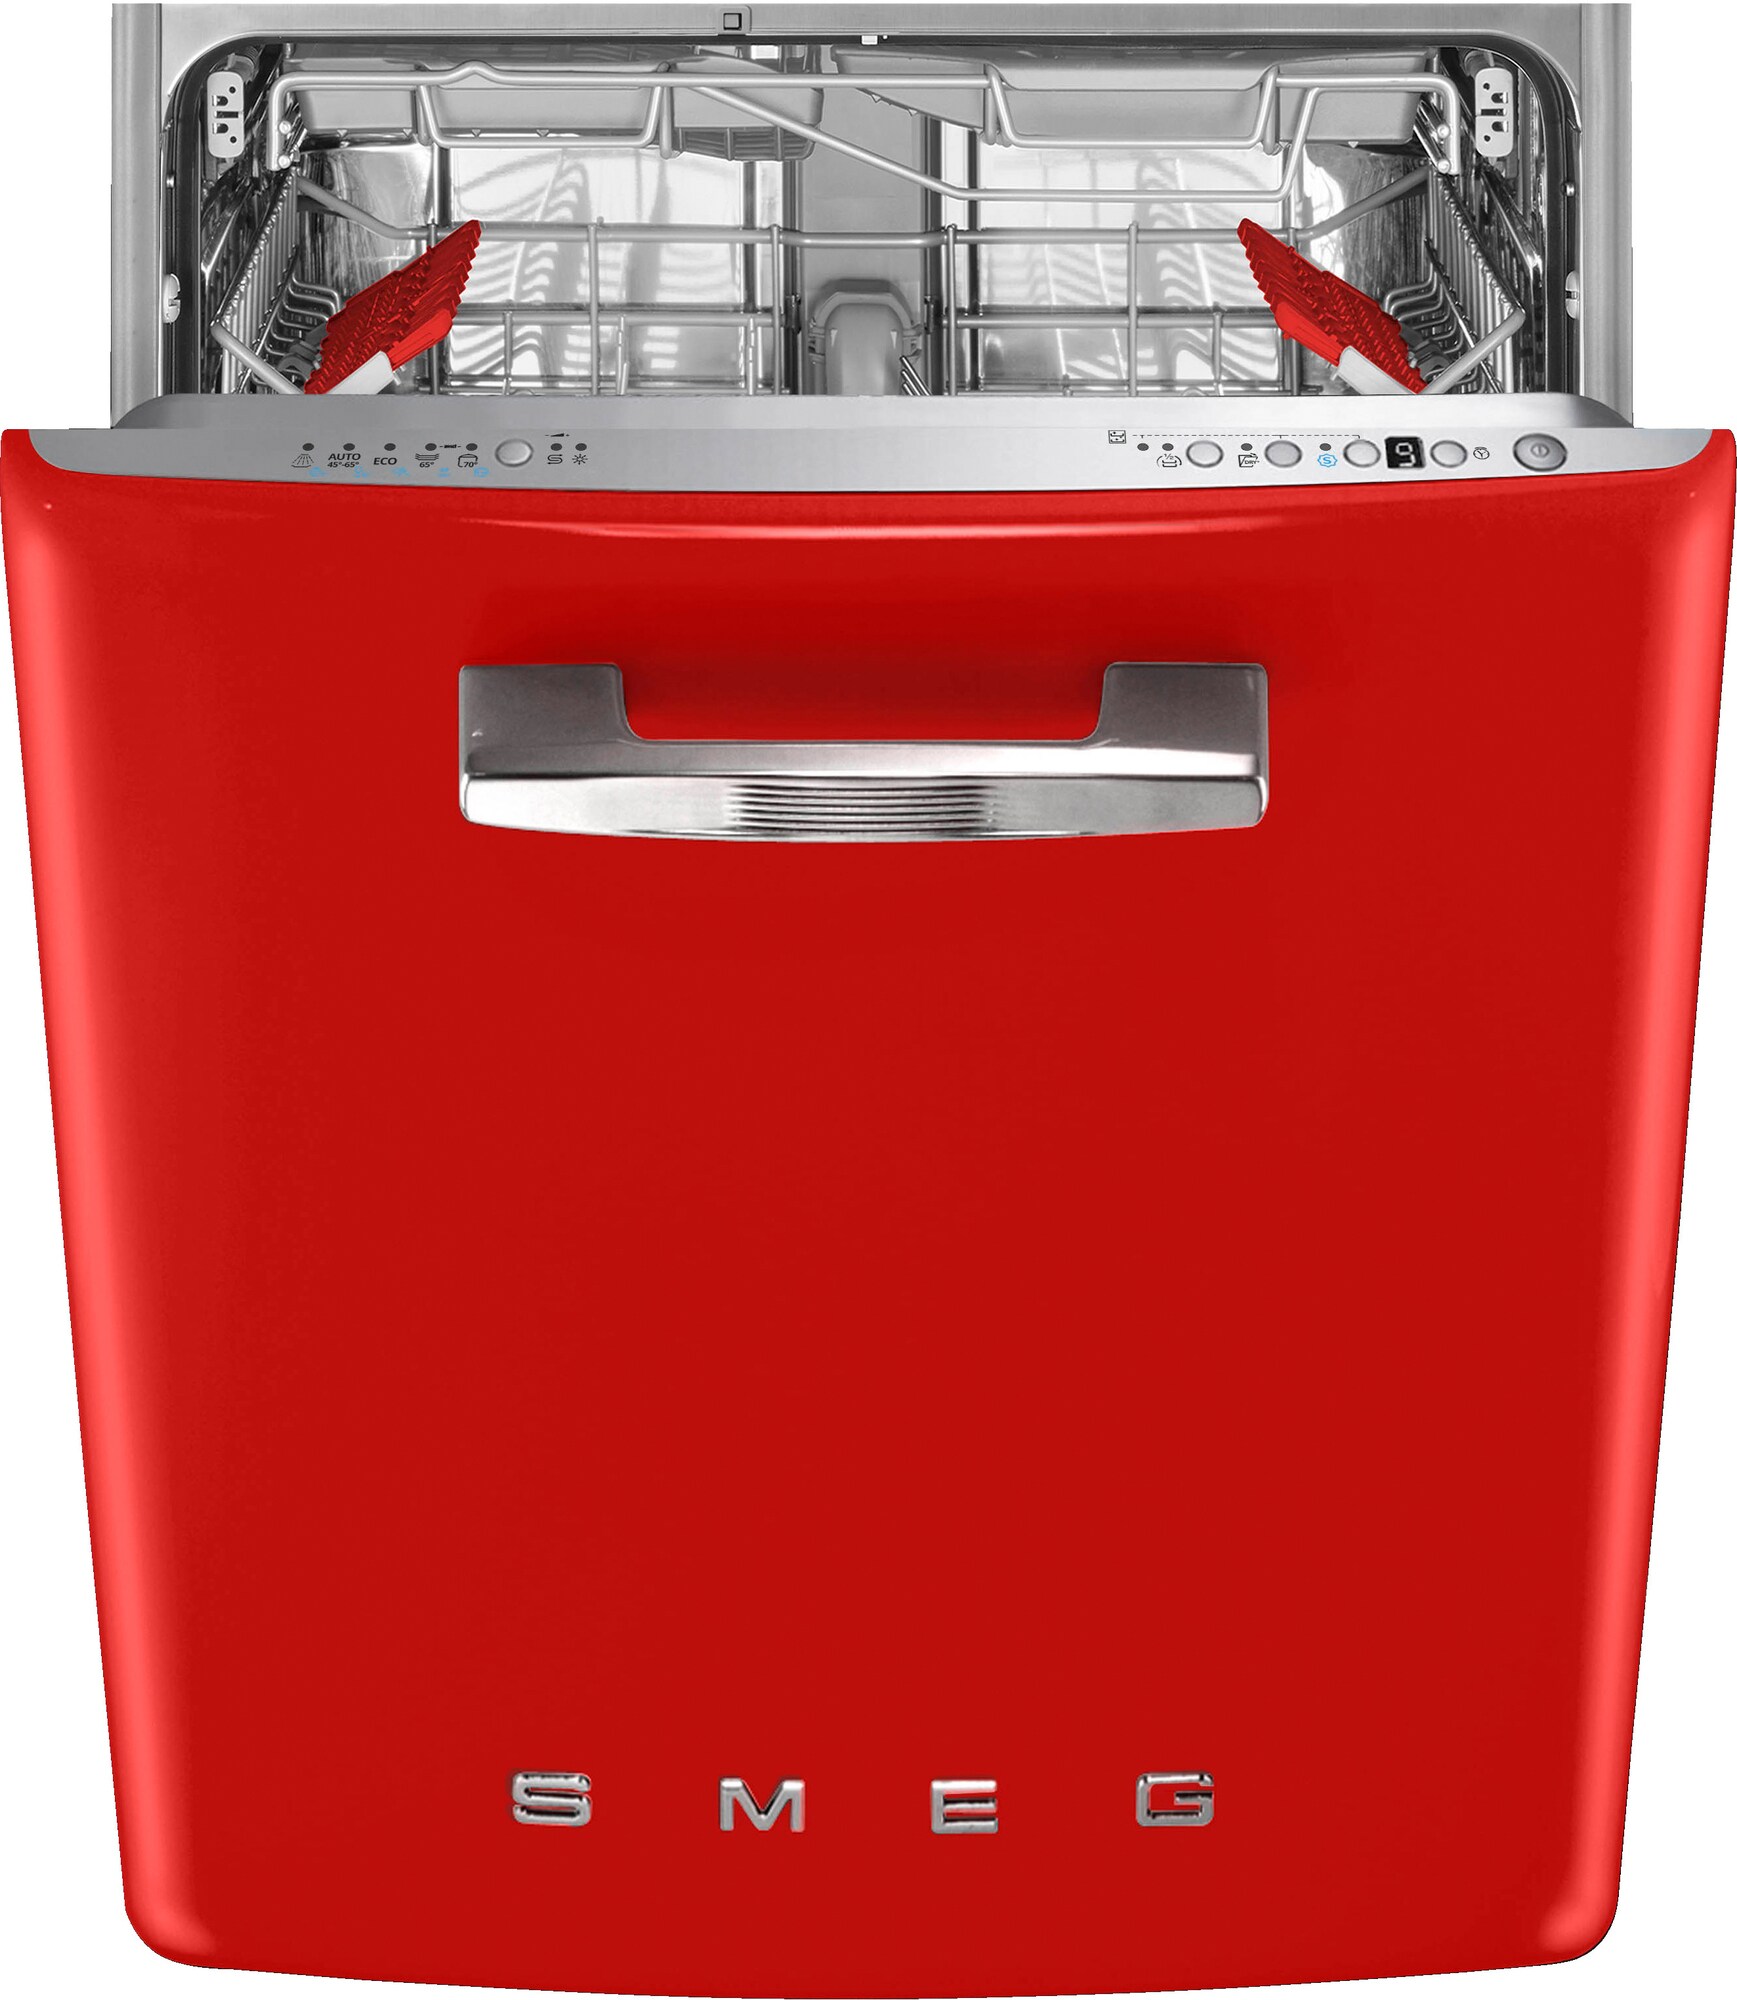 Smeg 50 s style opvaskemaskine STFABRD3 (rød) | Elgiganten